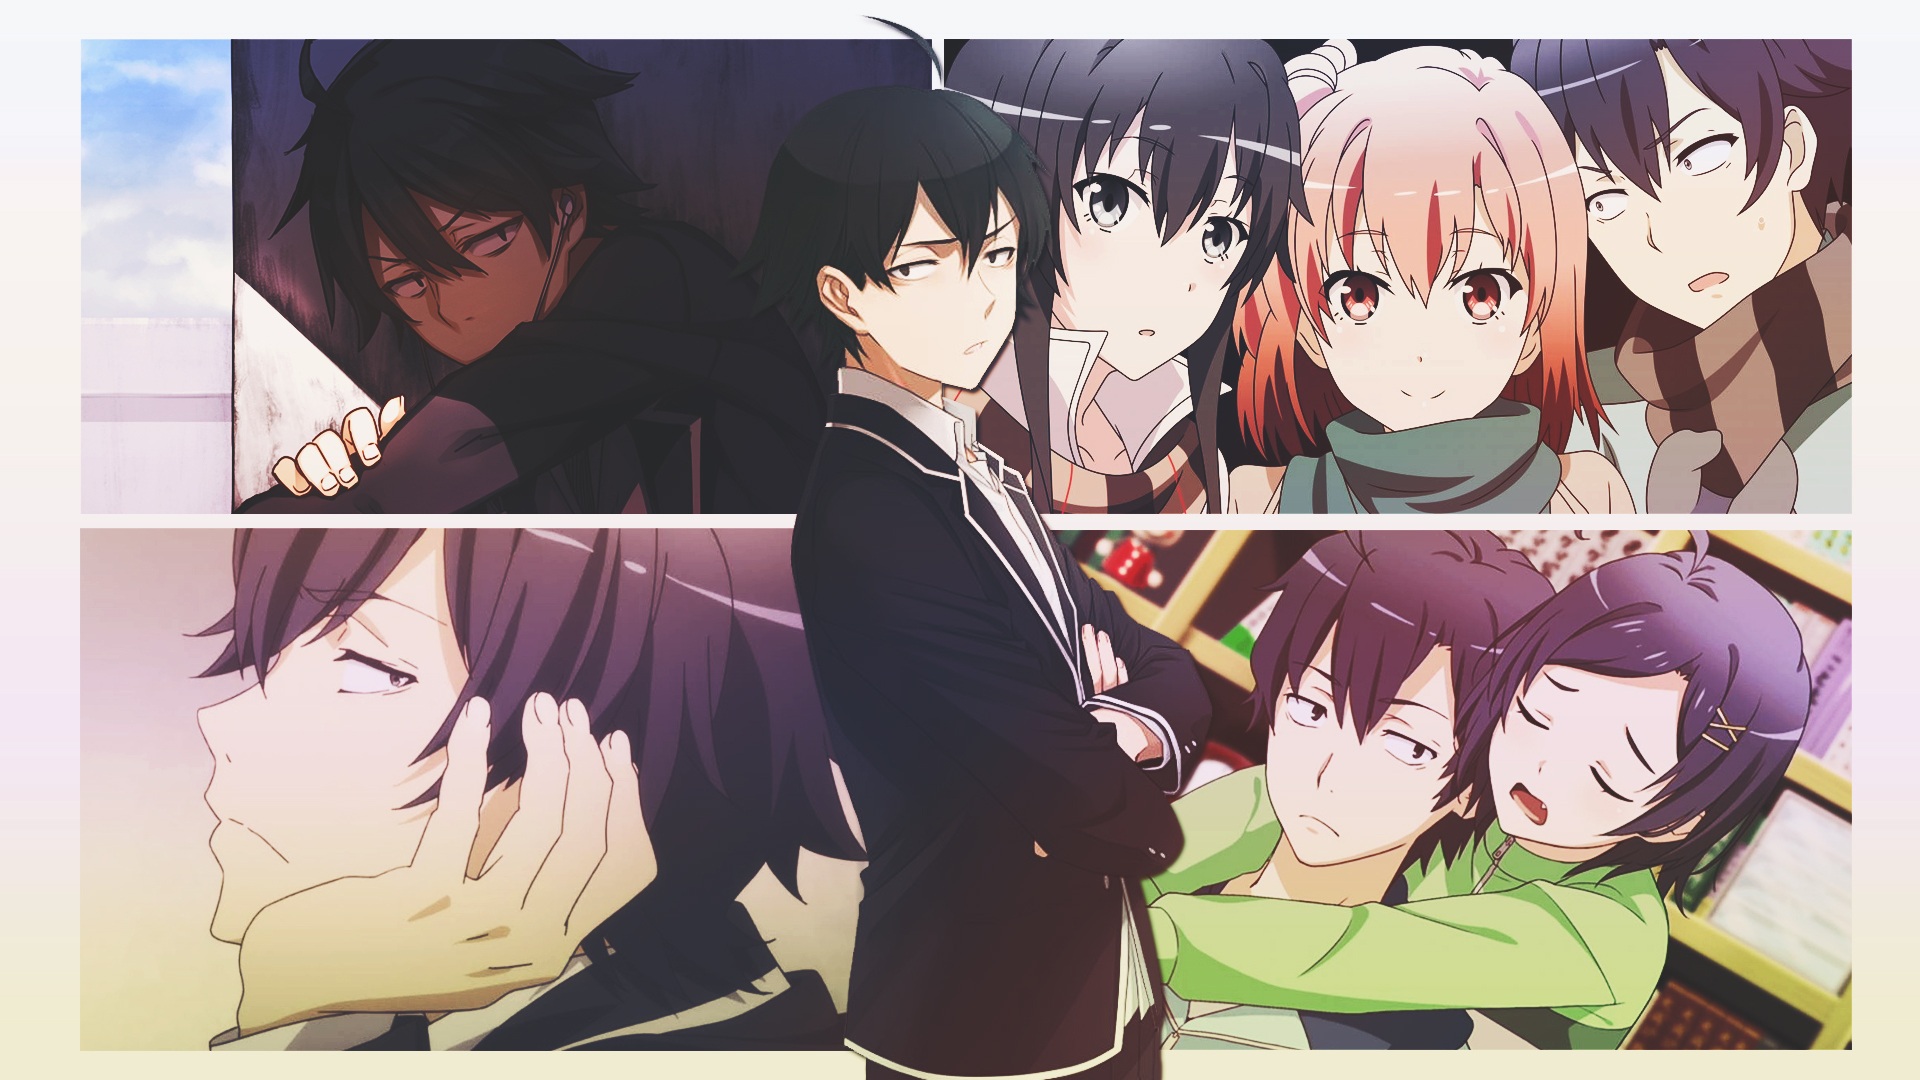 Anime My Teen Romantic Comedy SNAFU HD Wallpaper | Background Image